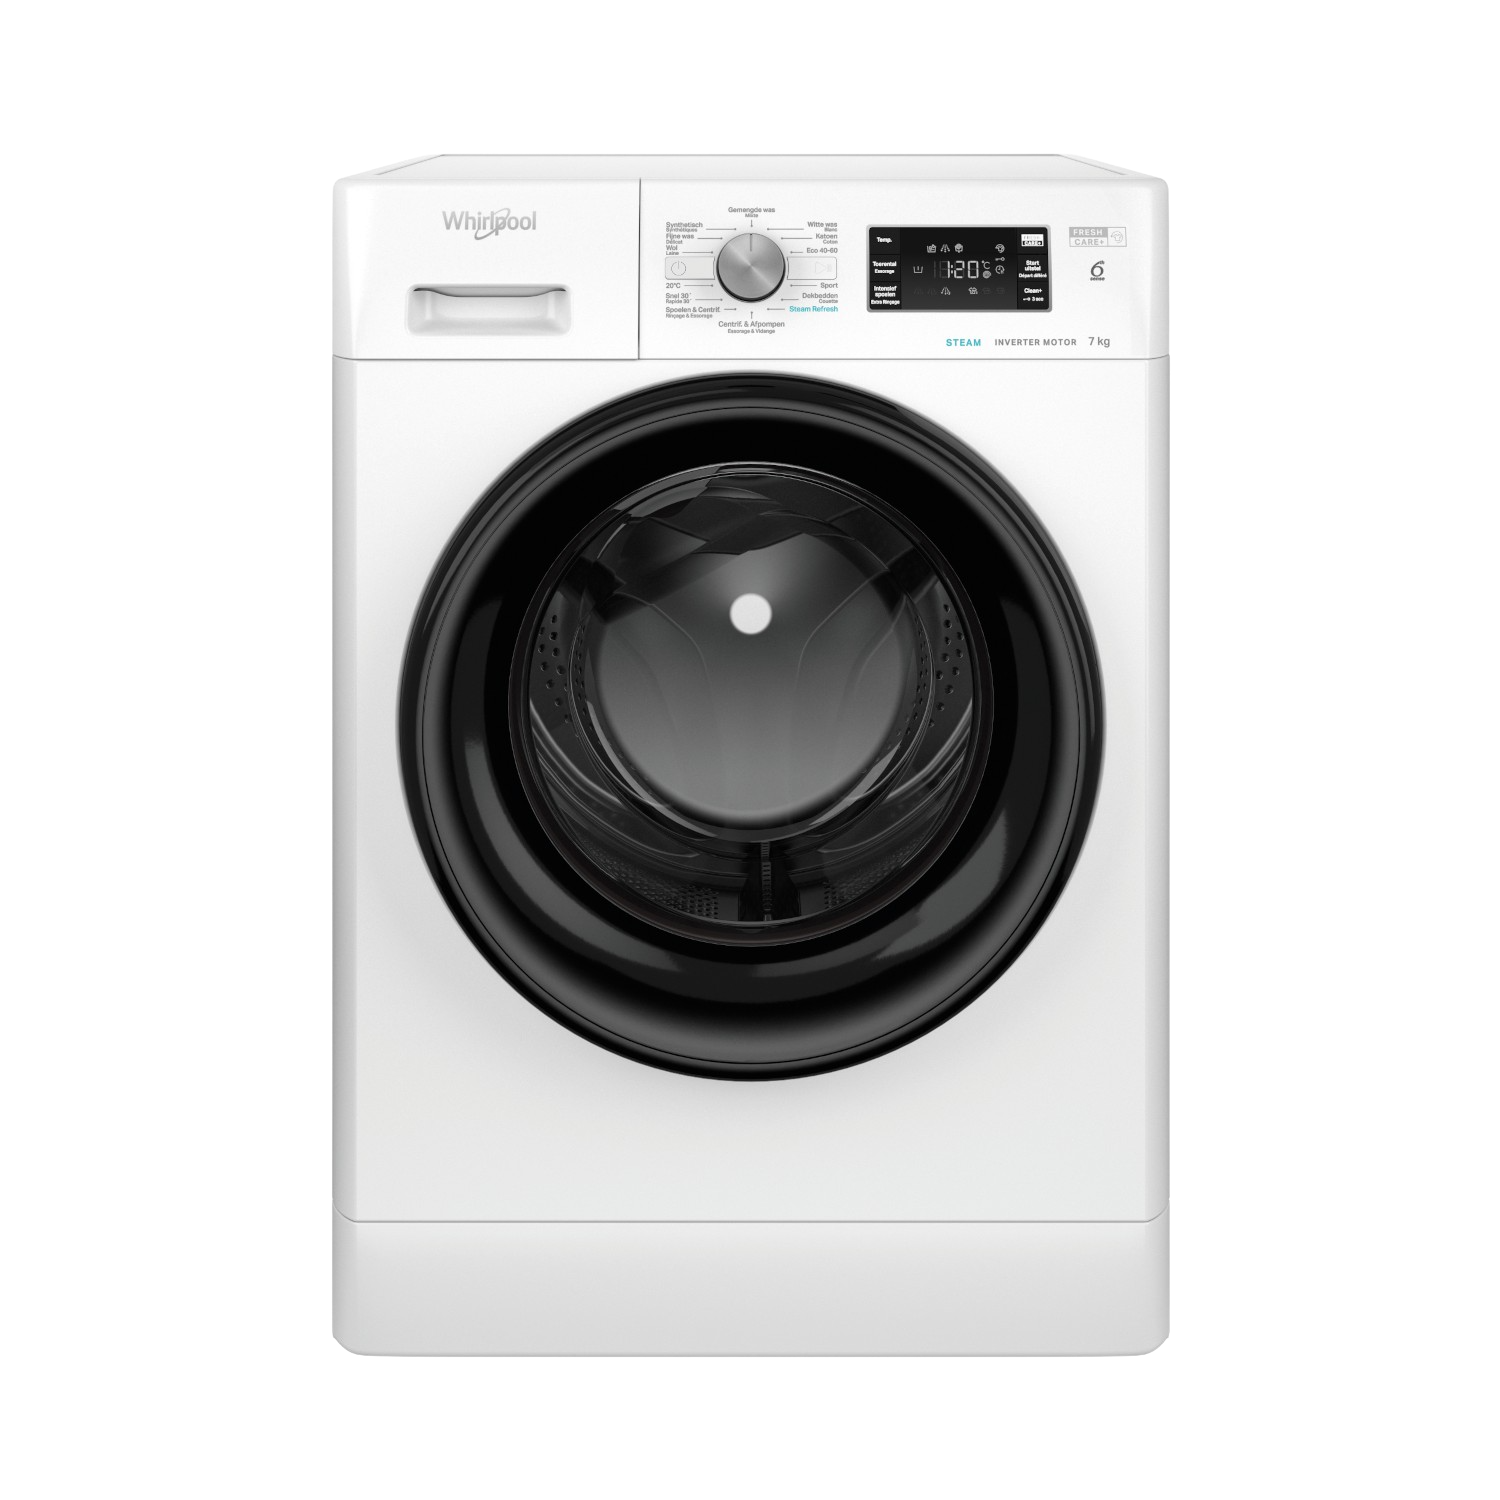 Whirlpool Ffbbe 7458 Bv F Wasmachine